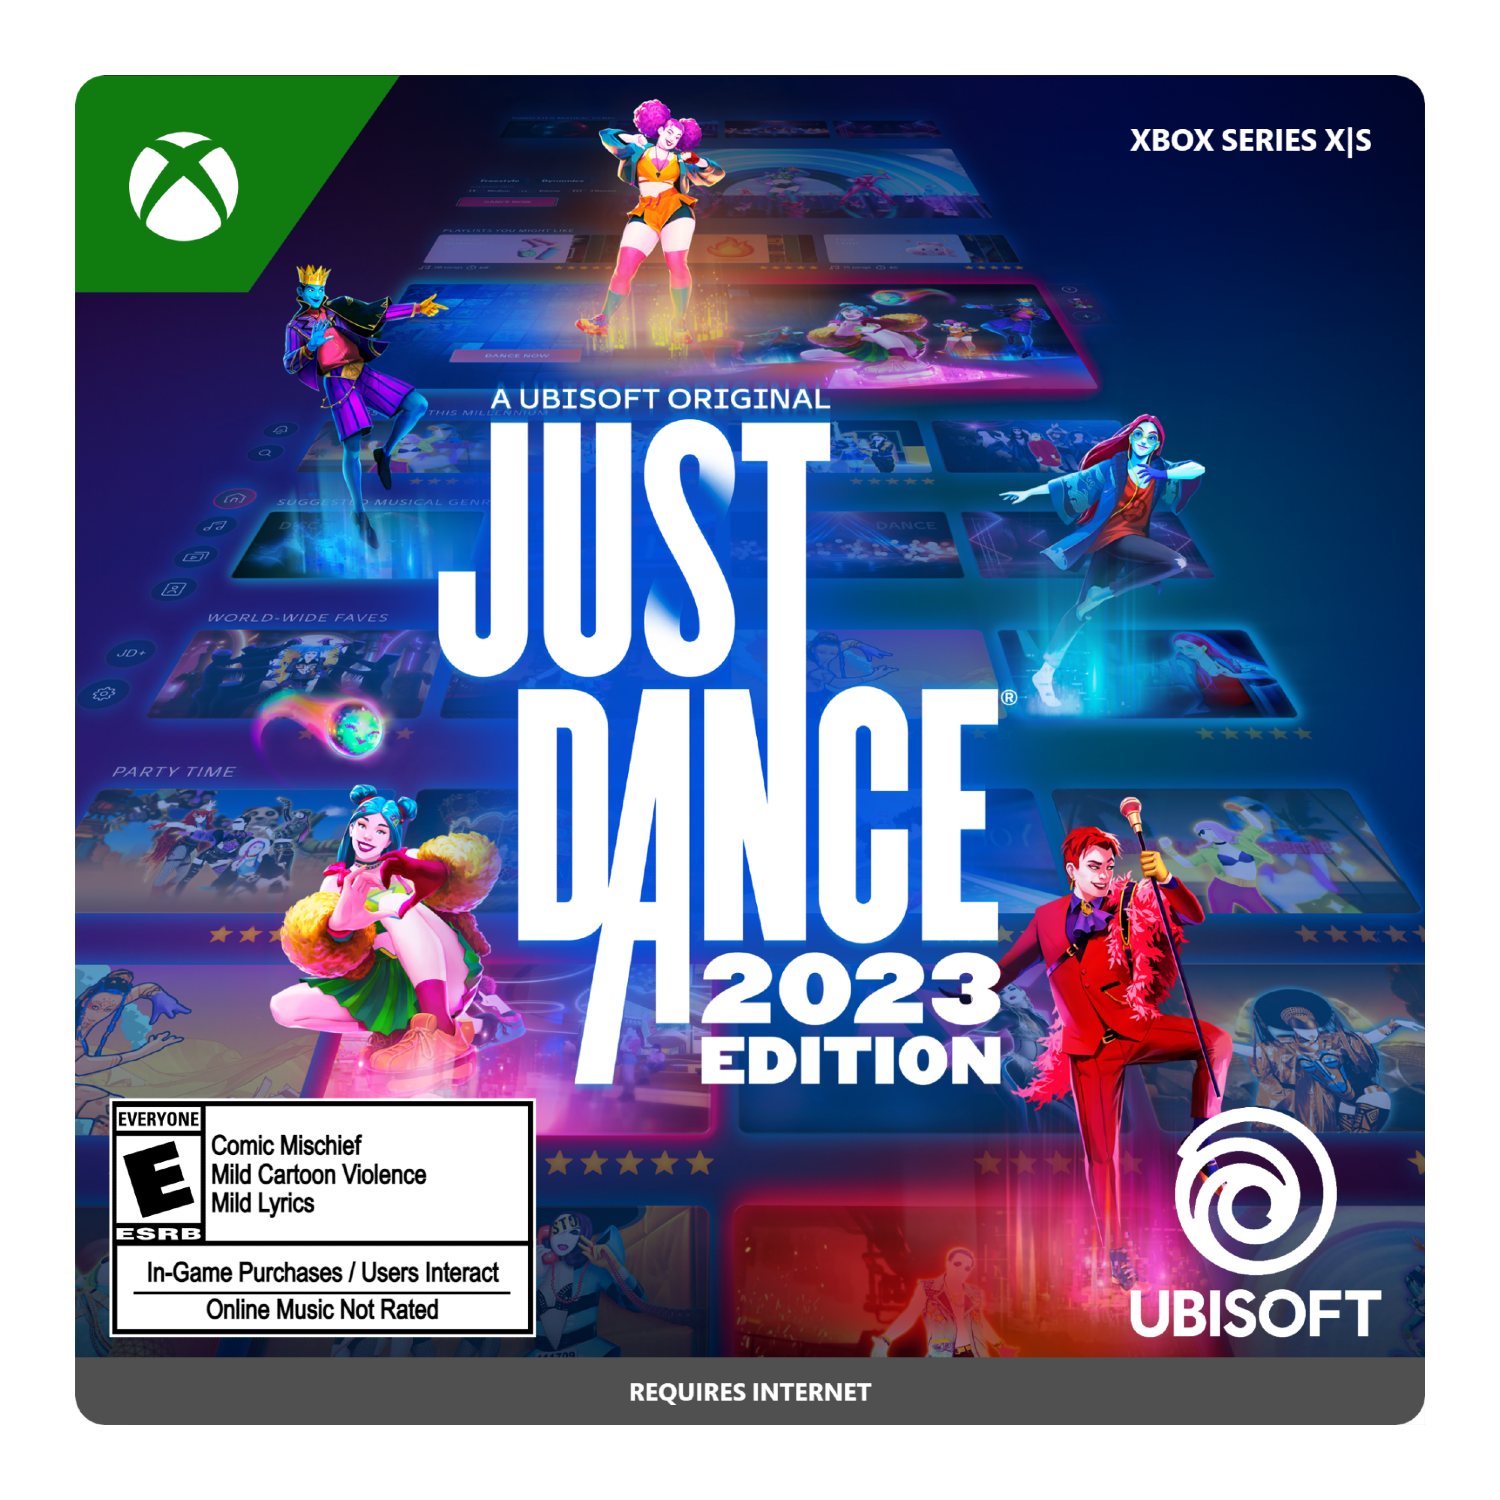 Just Dance 2023 Edition no llegará a PS4 ni a Xbox One